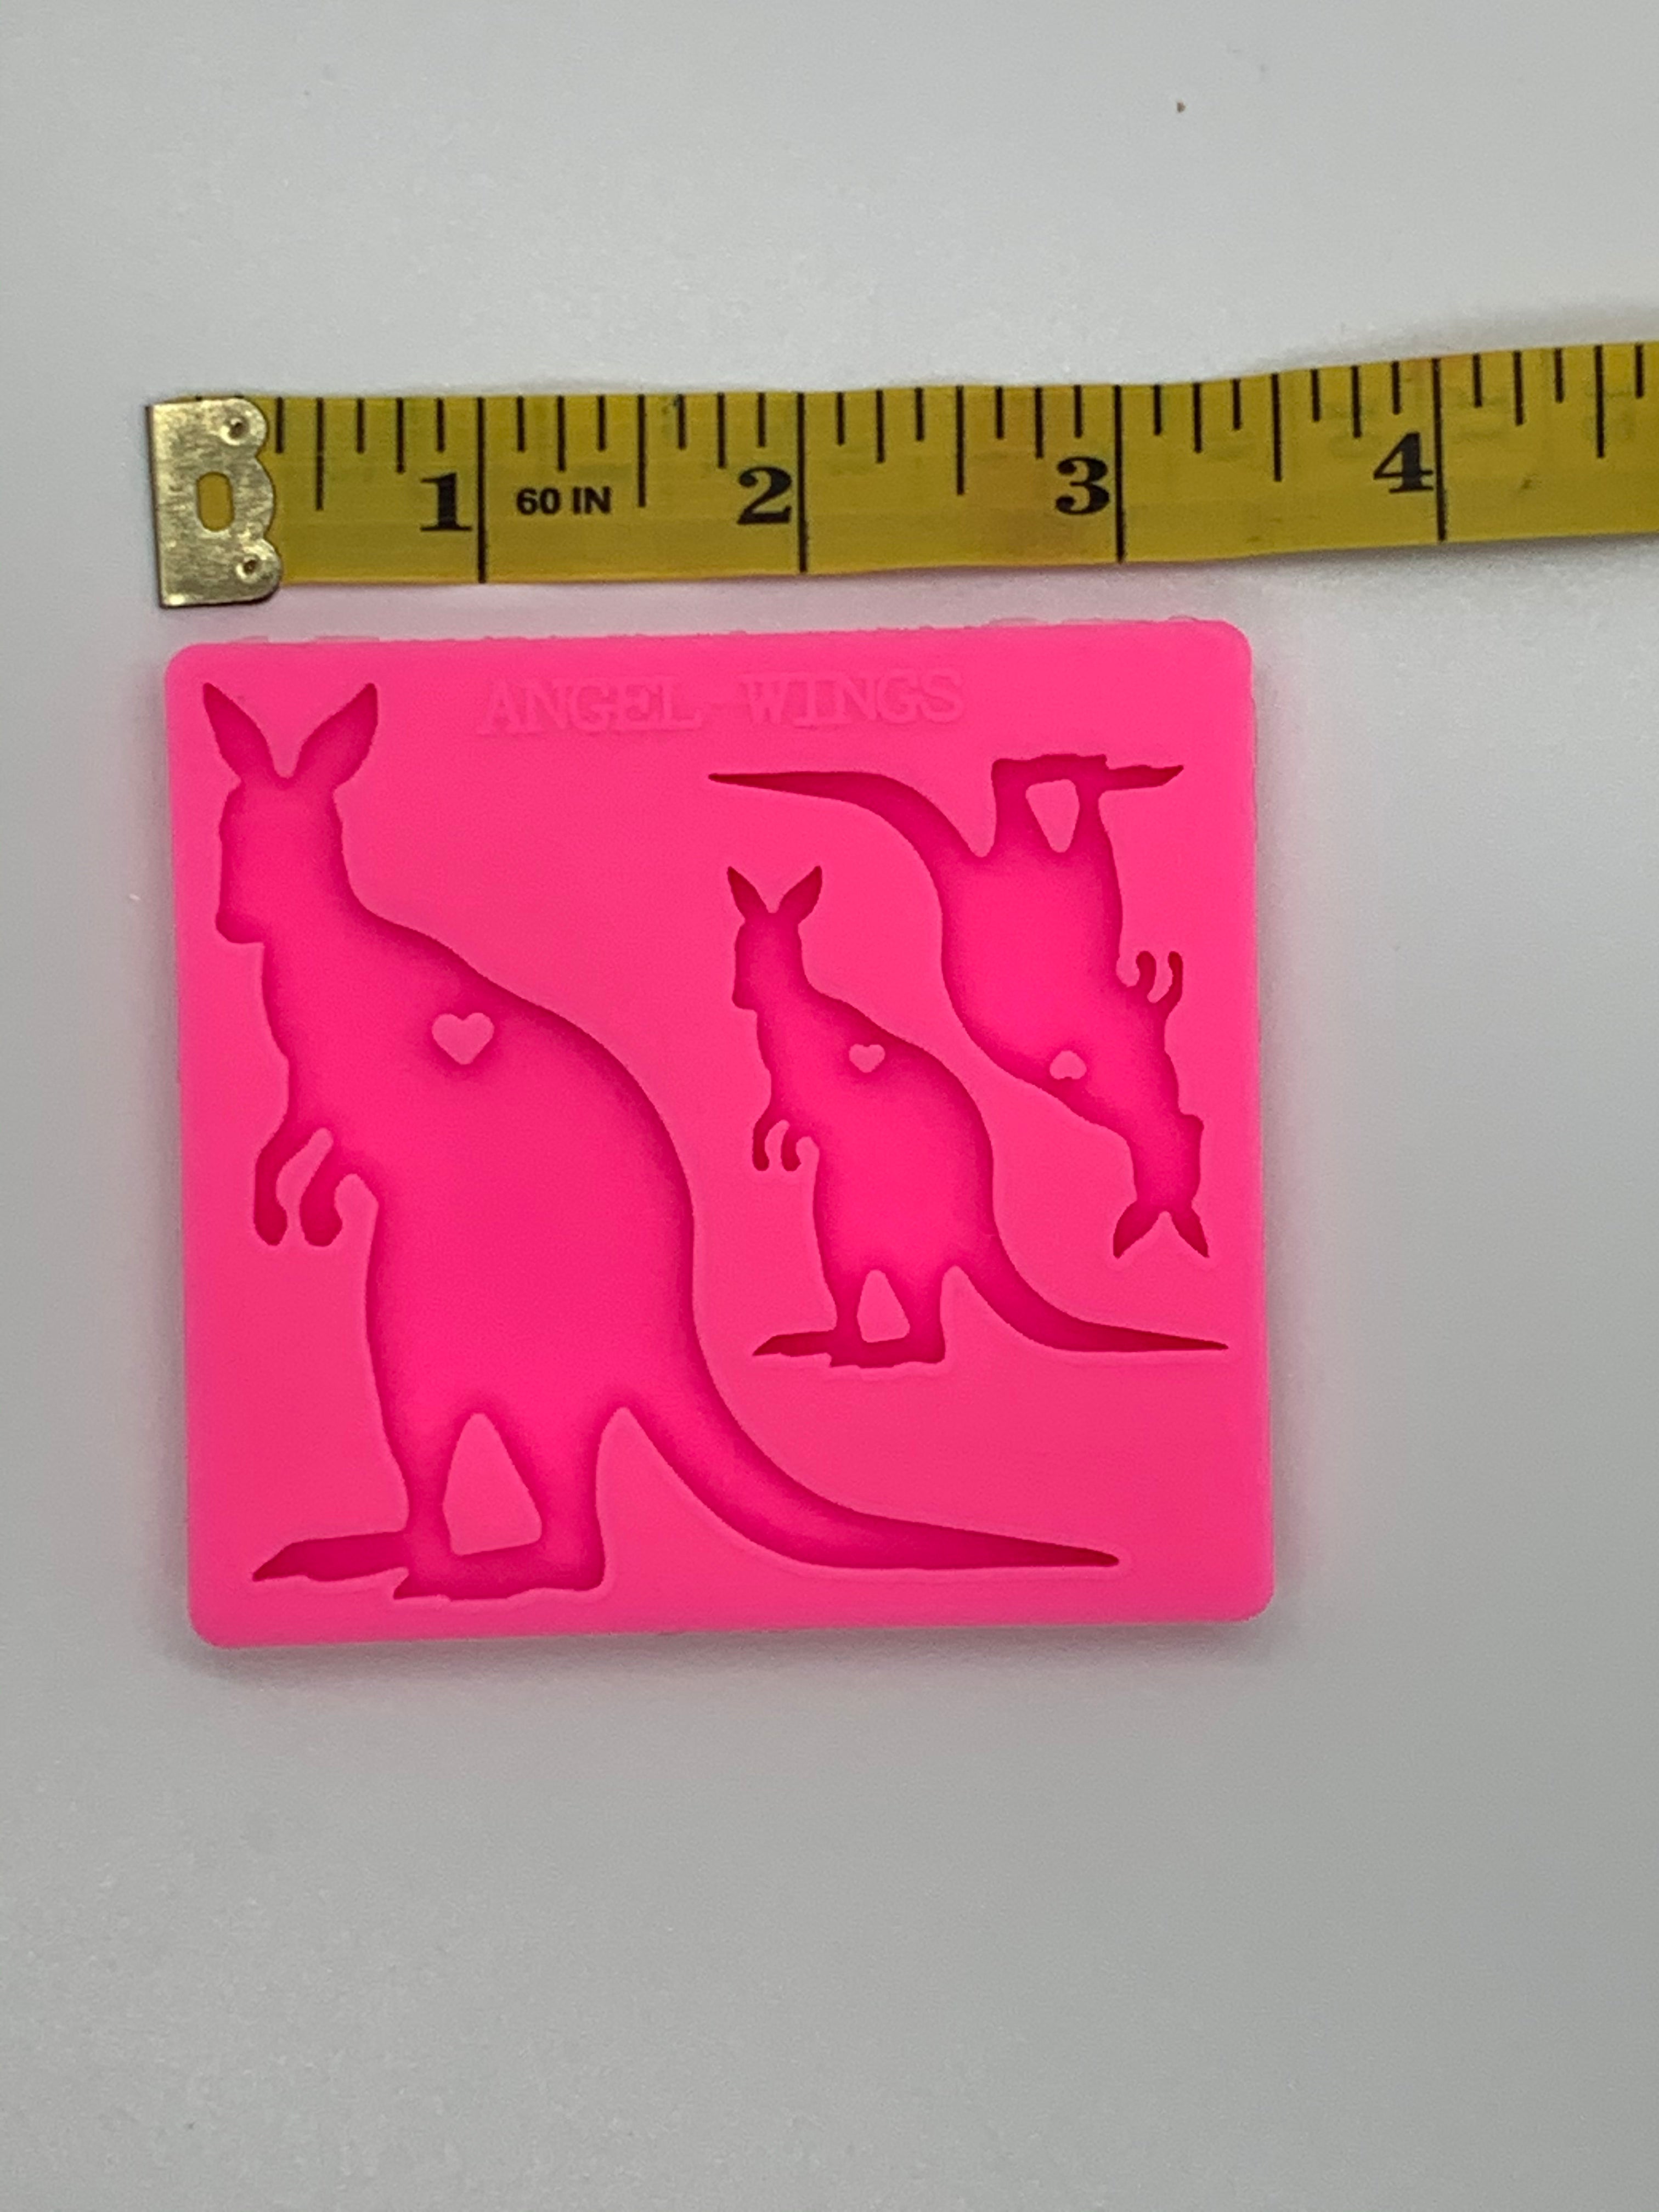 Kangaroo Family Shiny Silicone Mold for Epoxy Resin Crafts